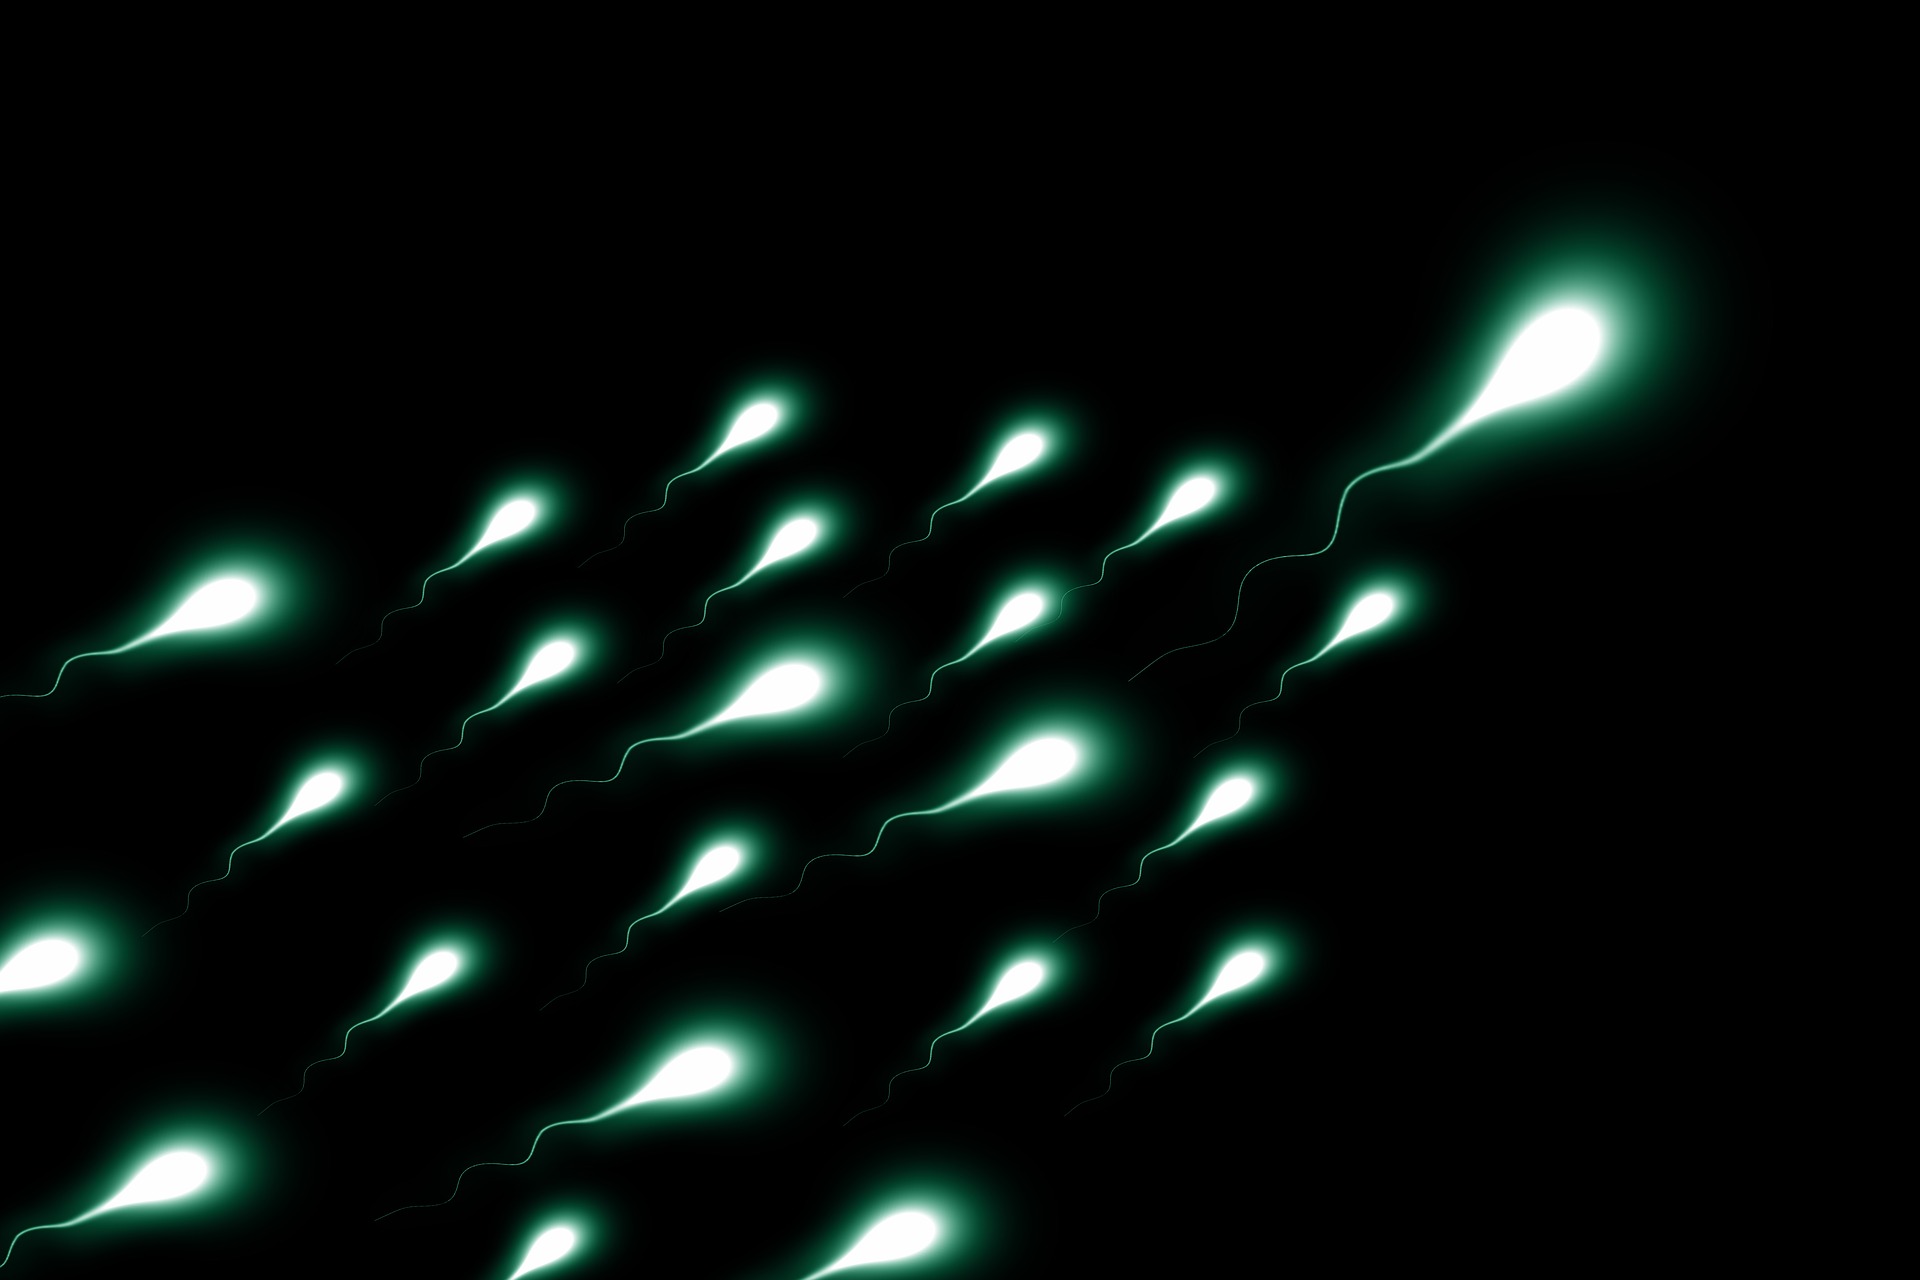 Spermában bukkantak koronavírus nyomaira kínai kutatók